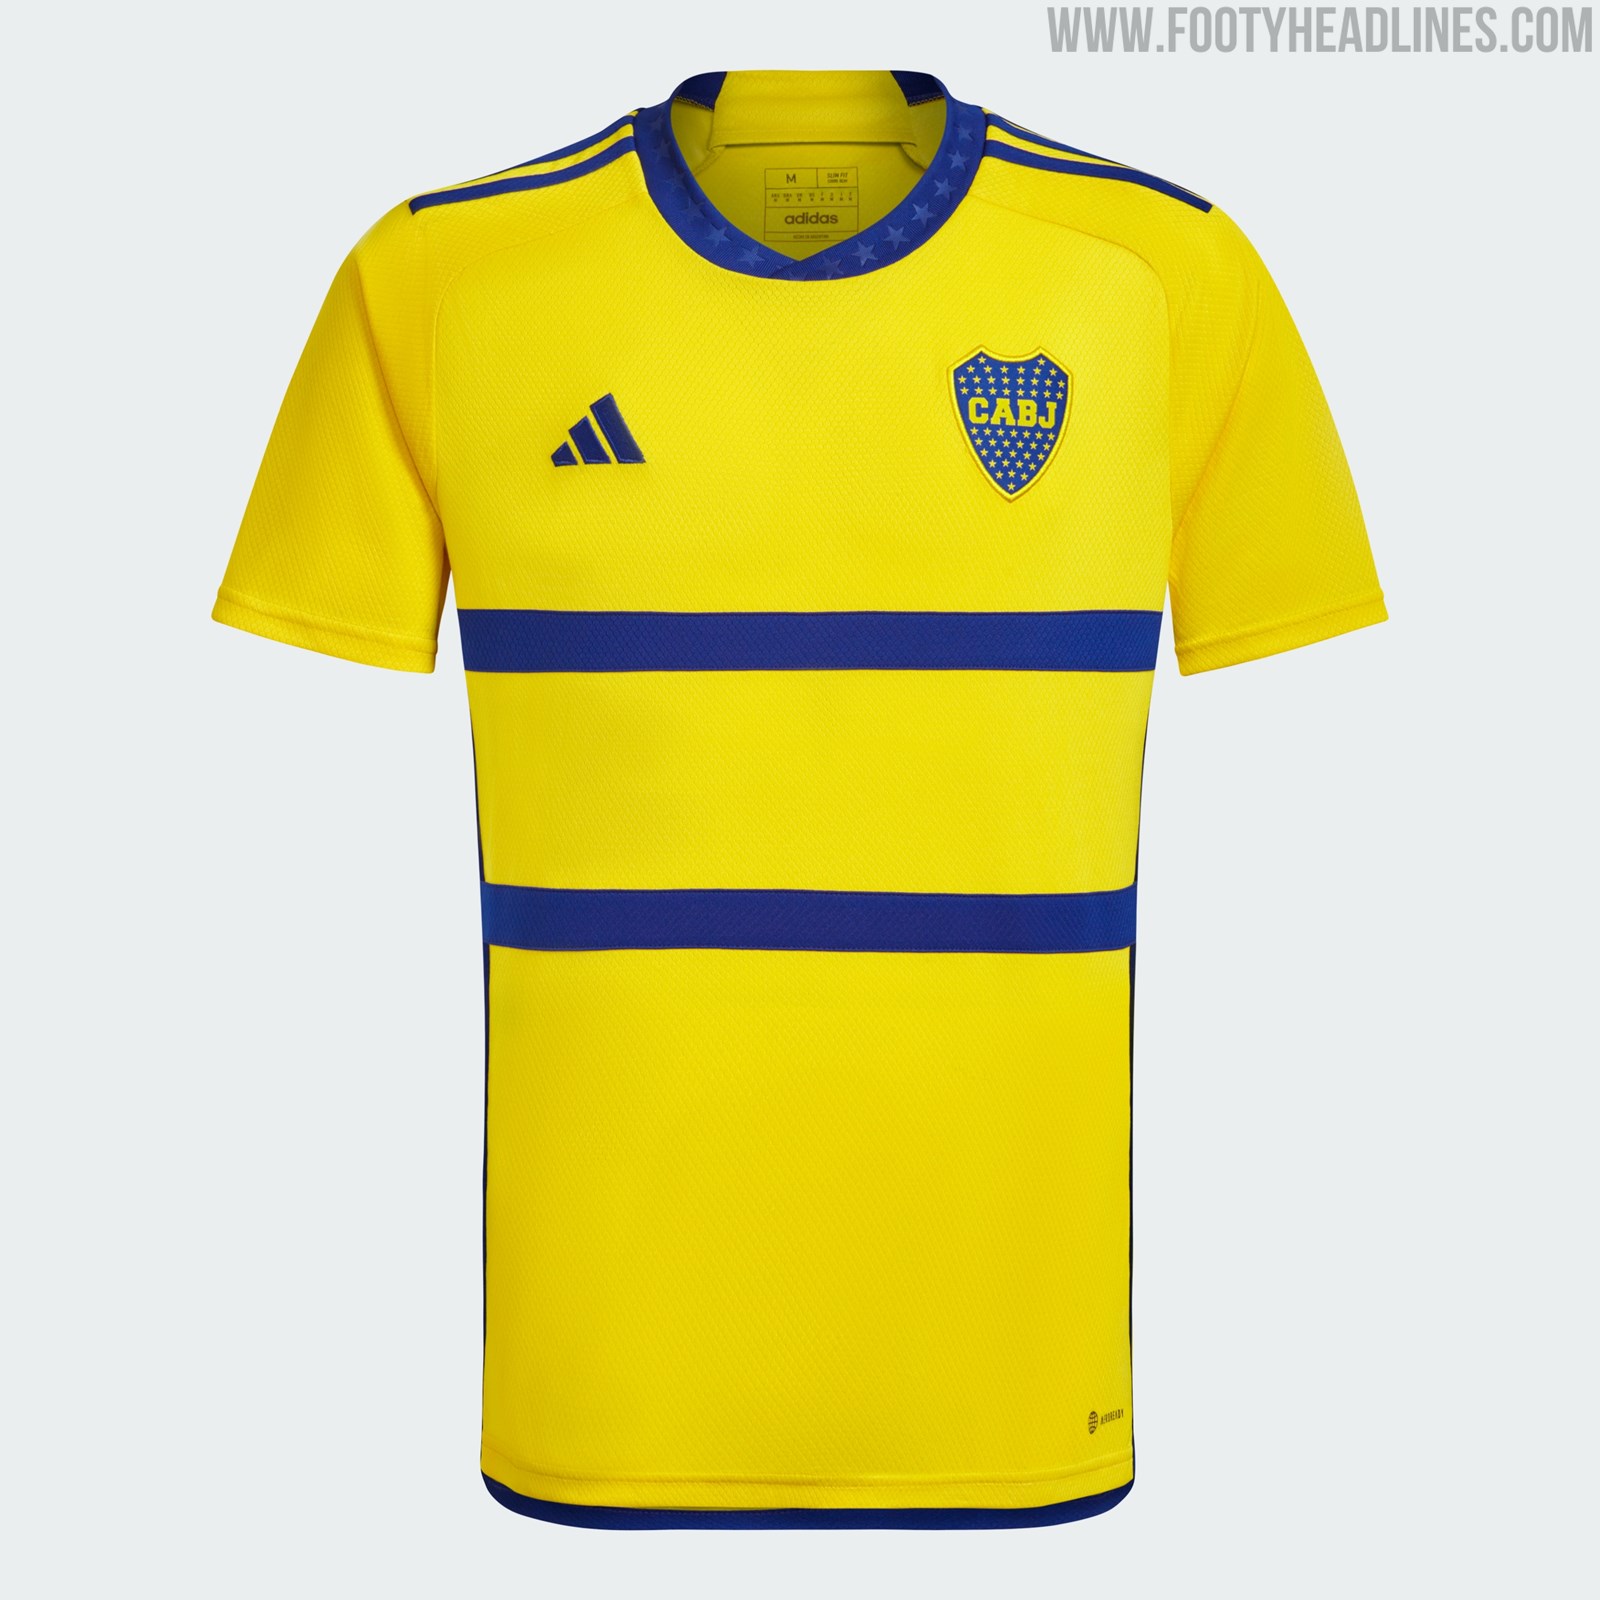 Boca Juniors 22-23 Away Kit Released - Footy Headlines